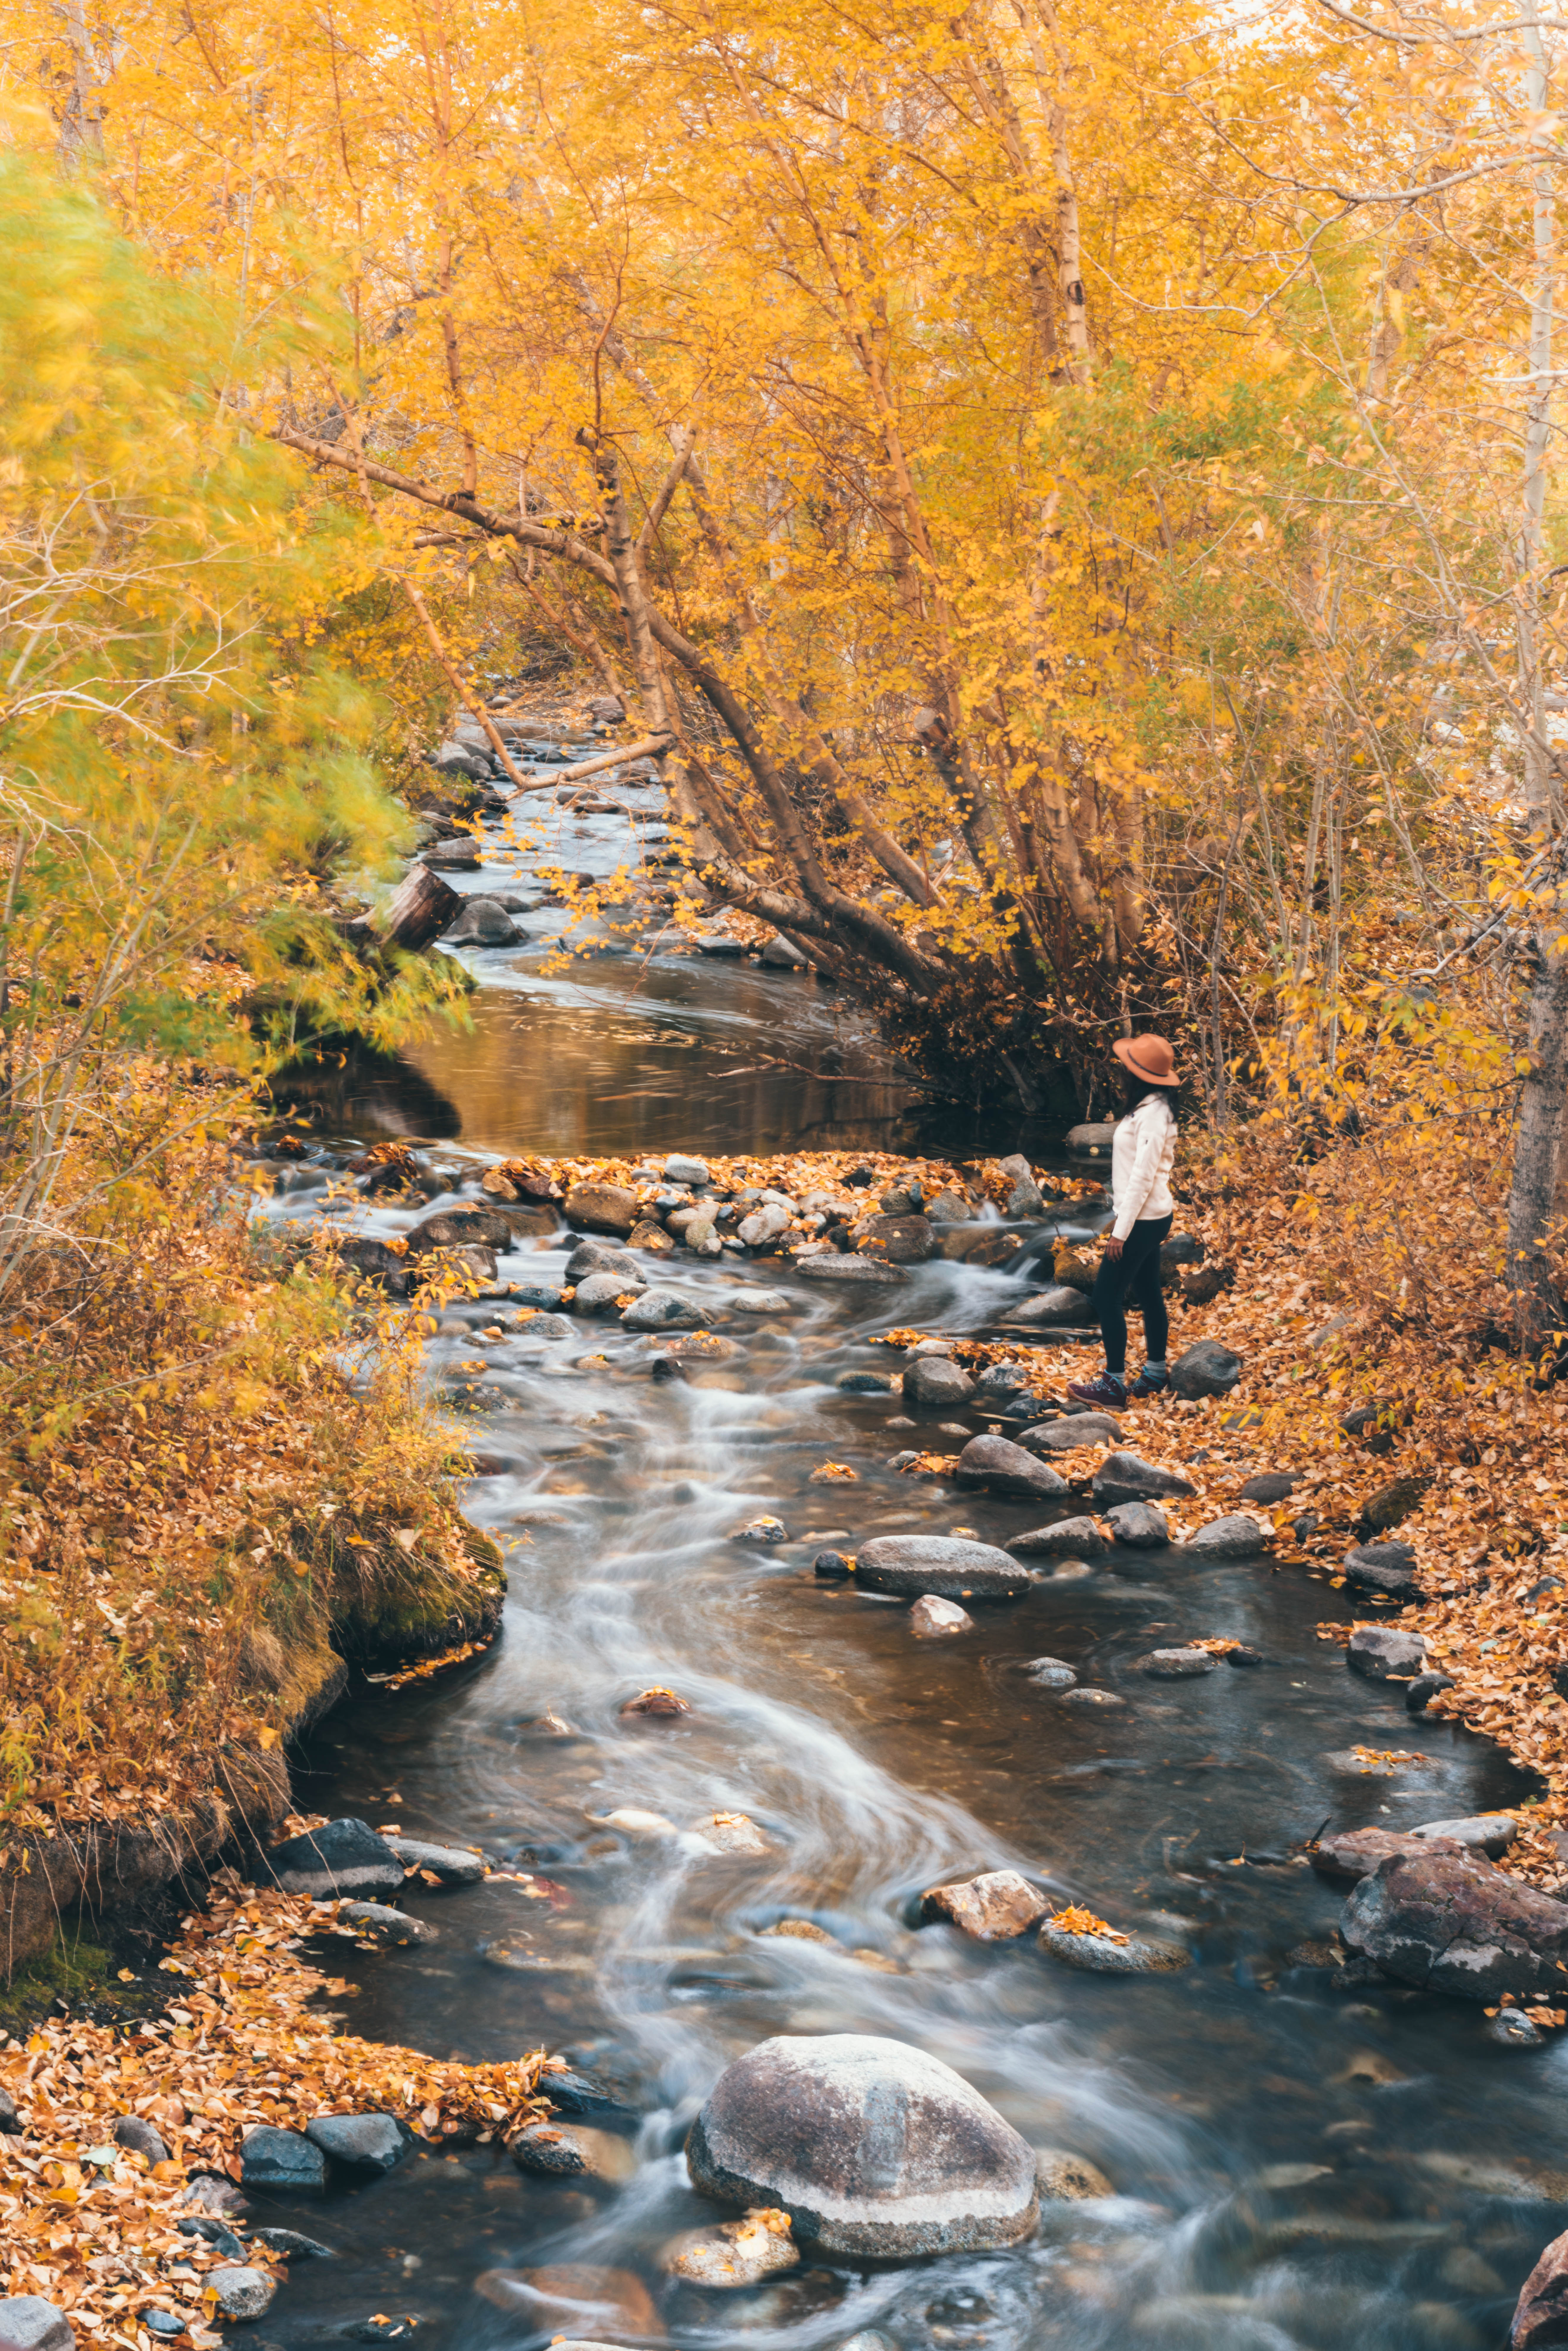 Fall colors at the creek